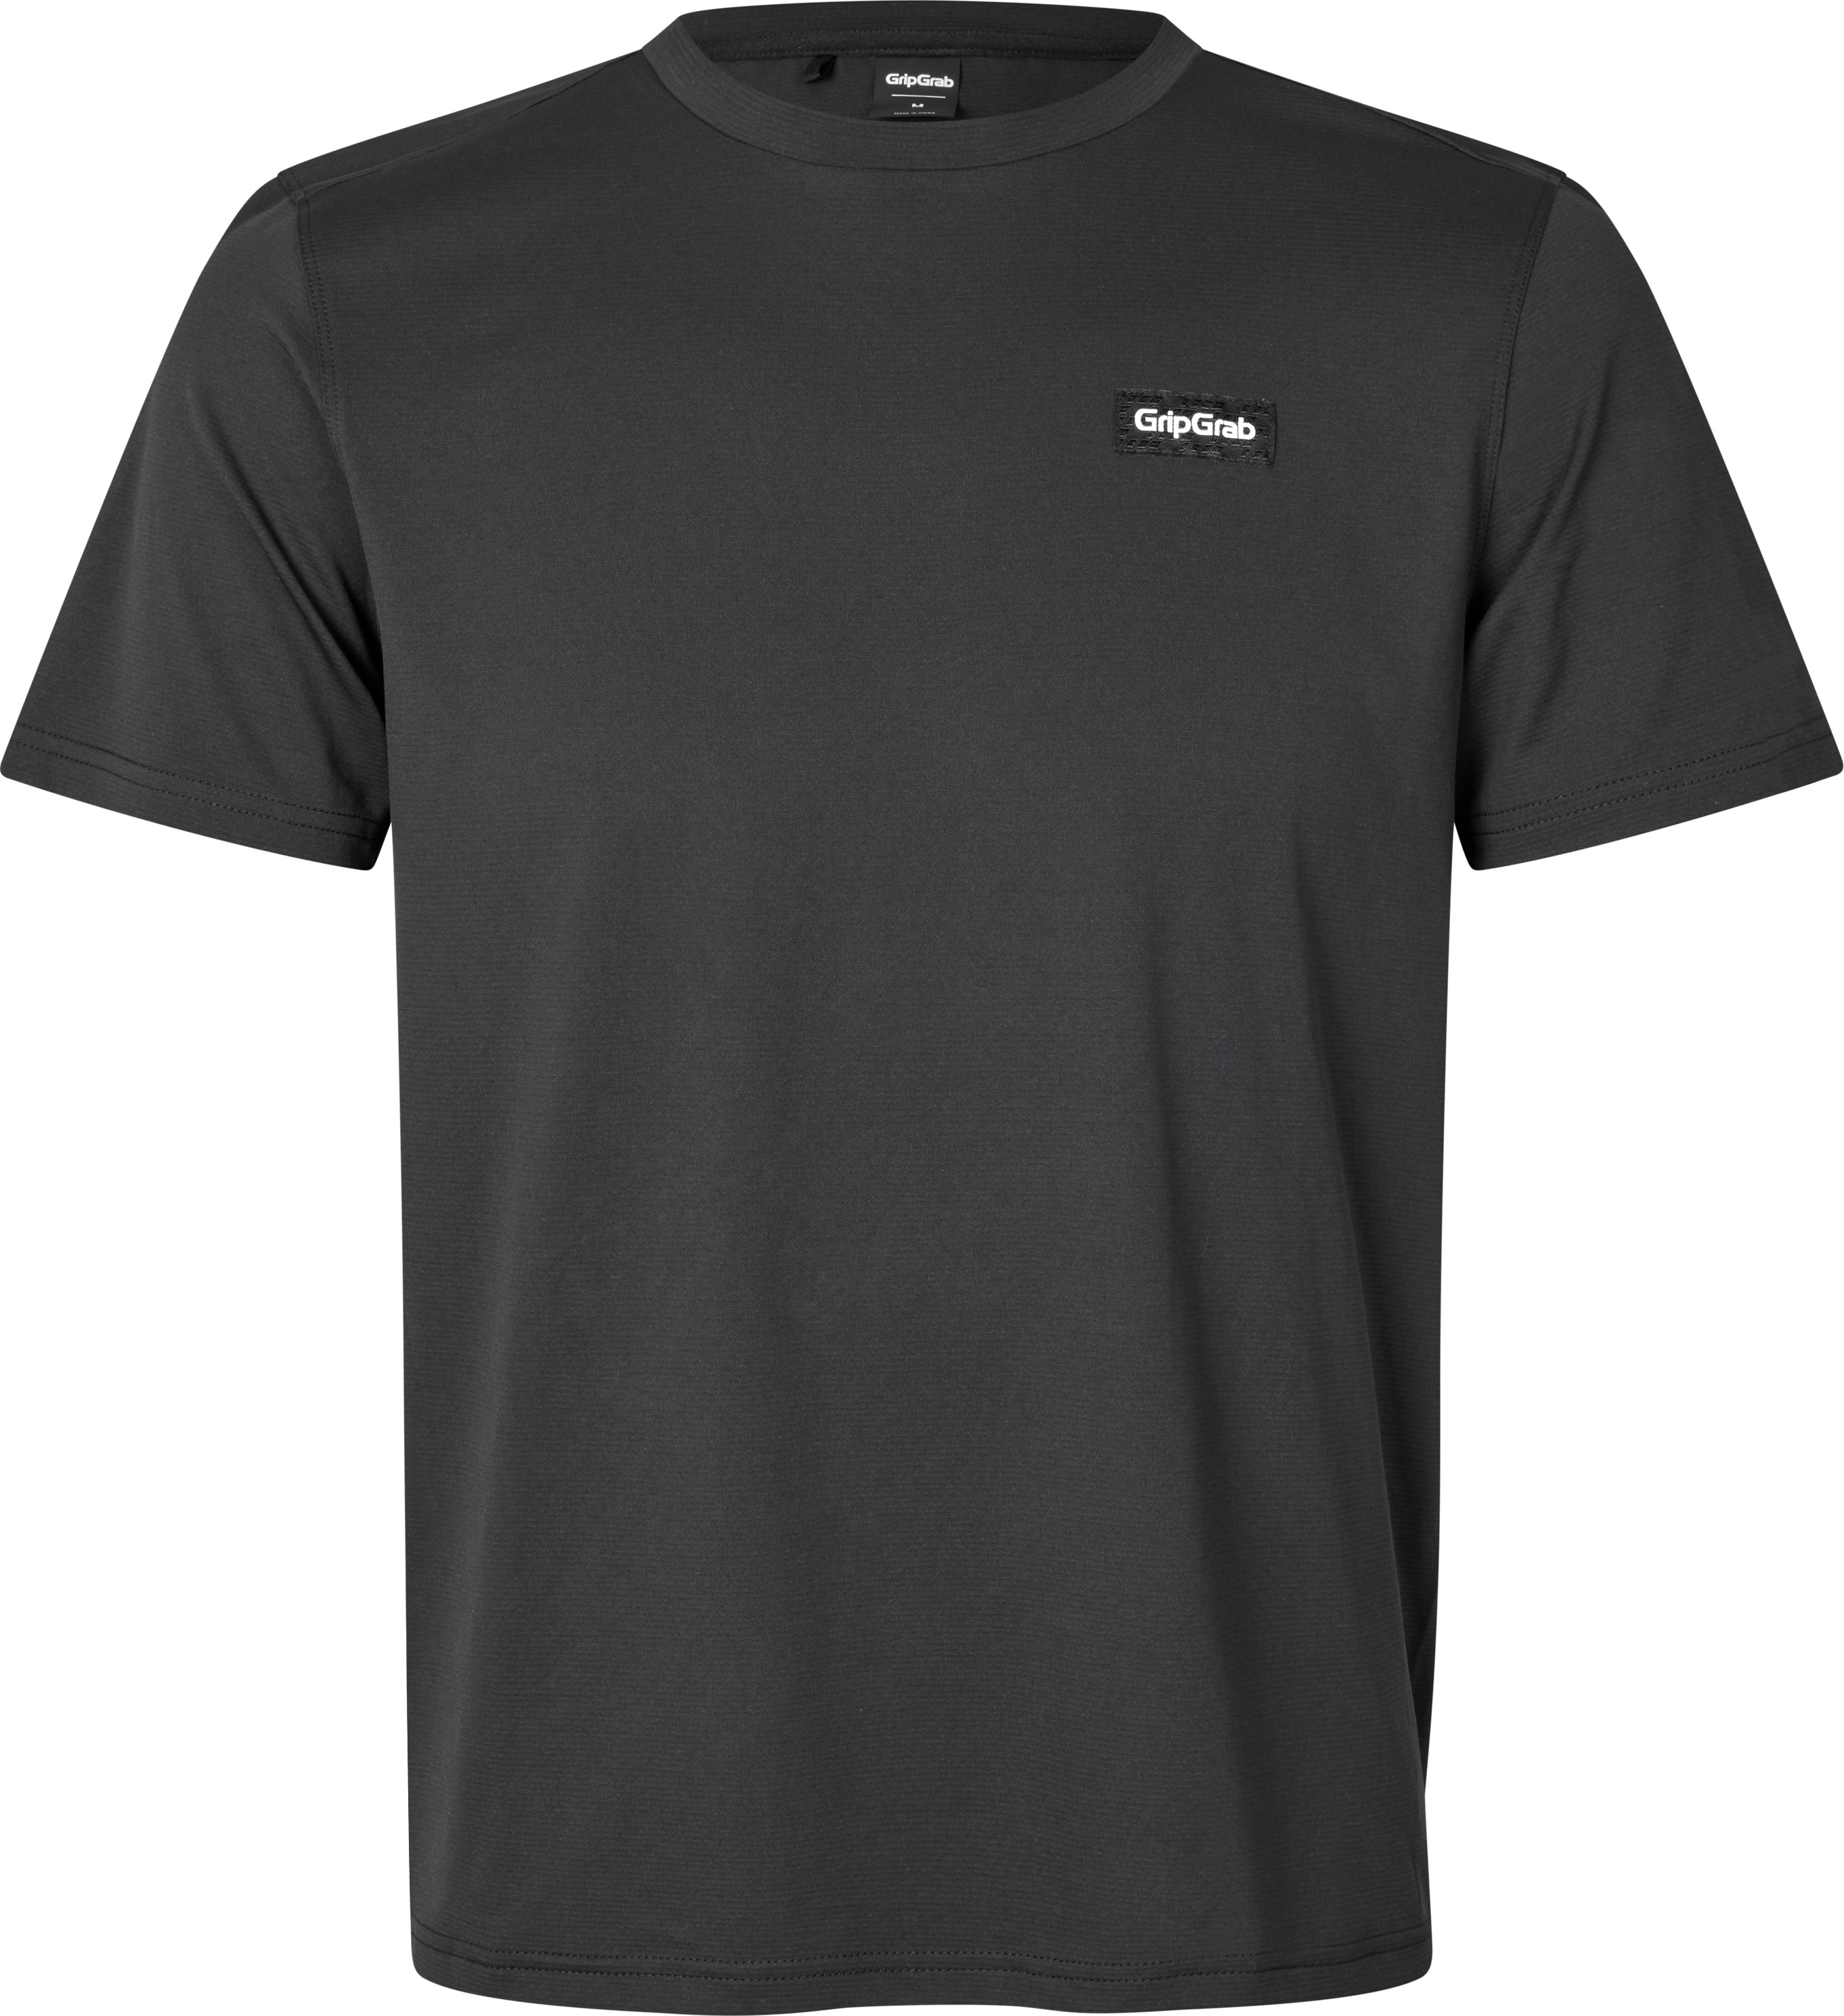 Gripgrab Men’s Flow Technical T-Shirt Black